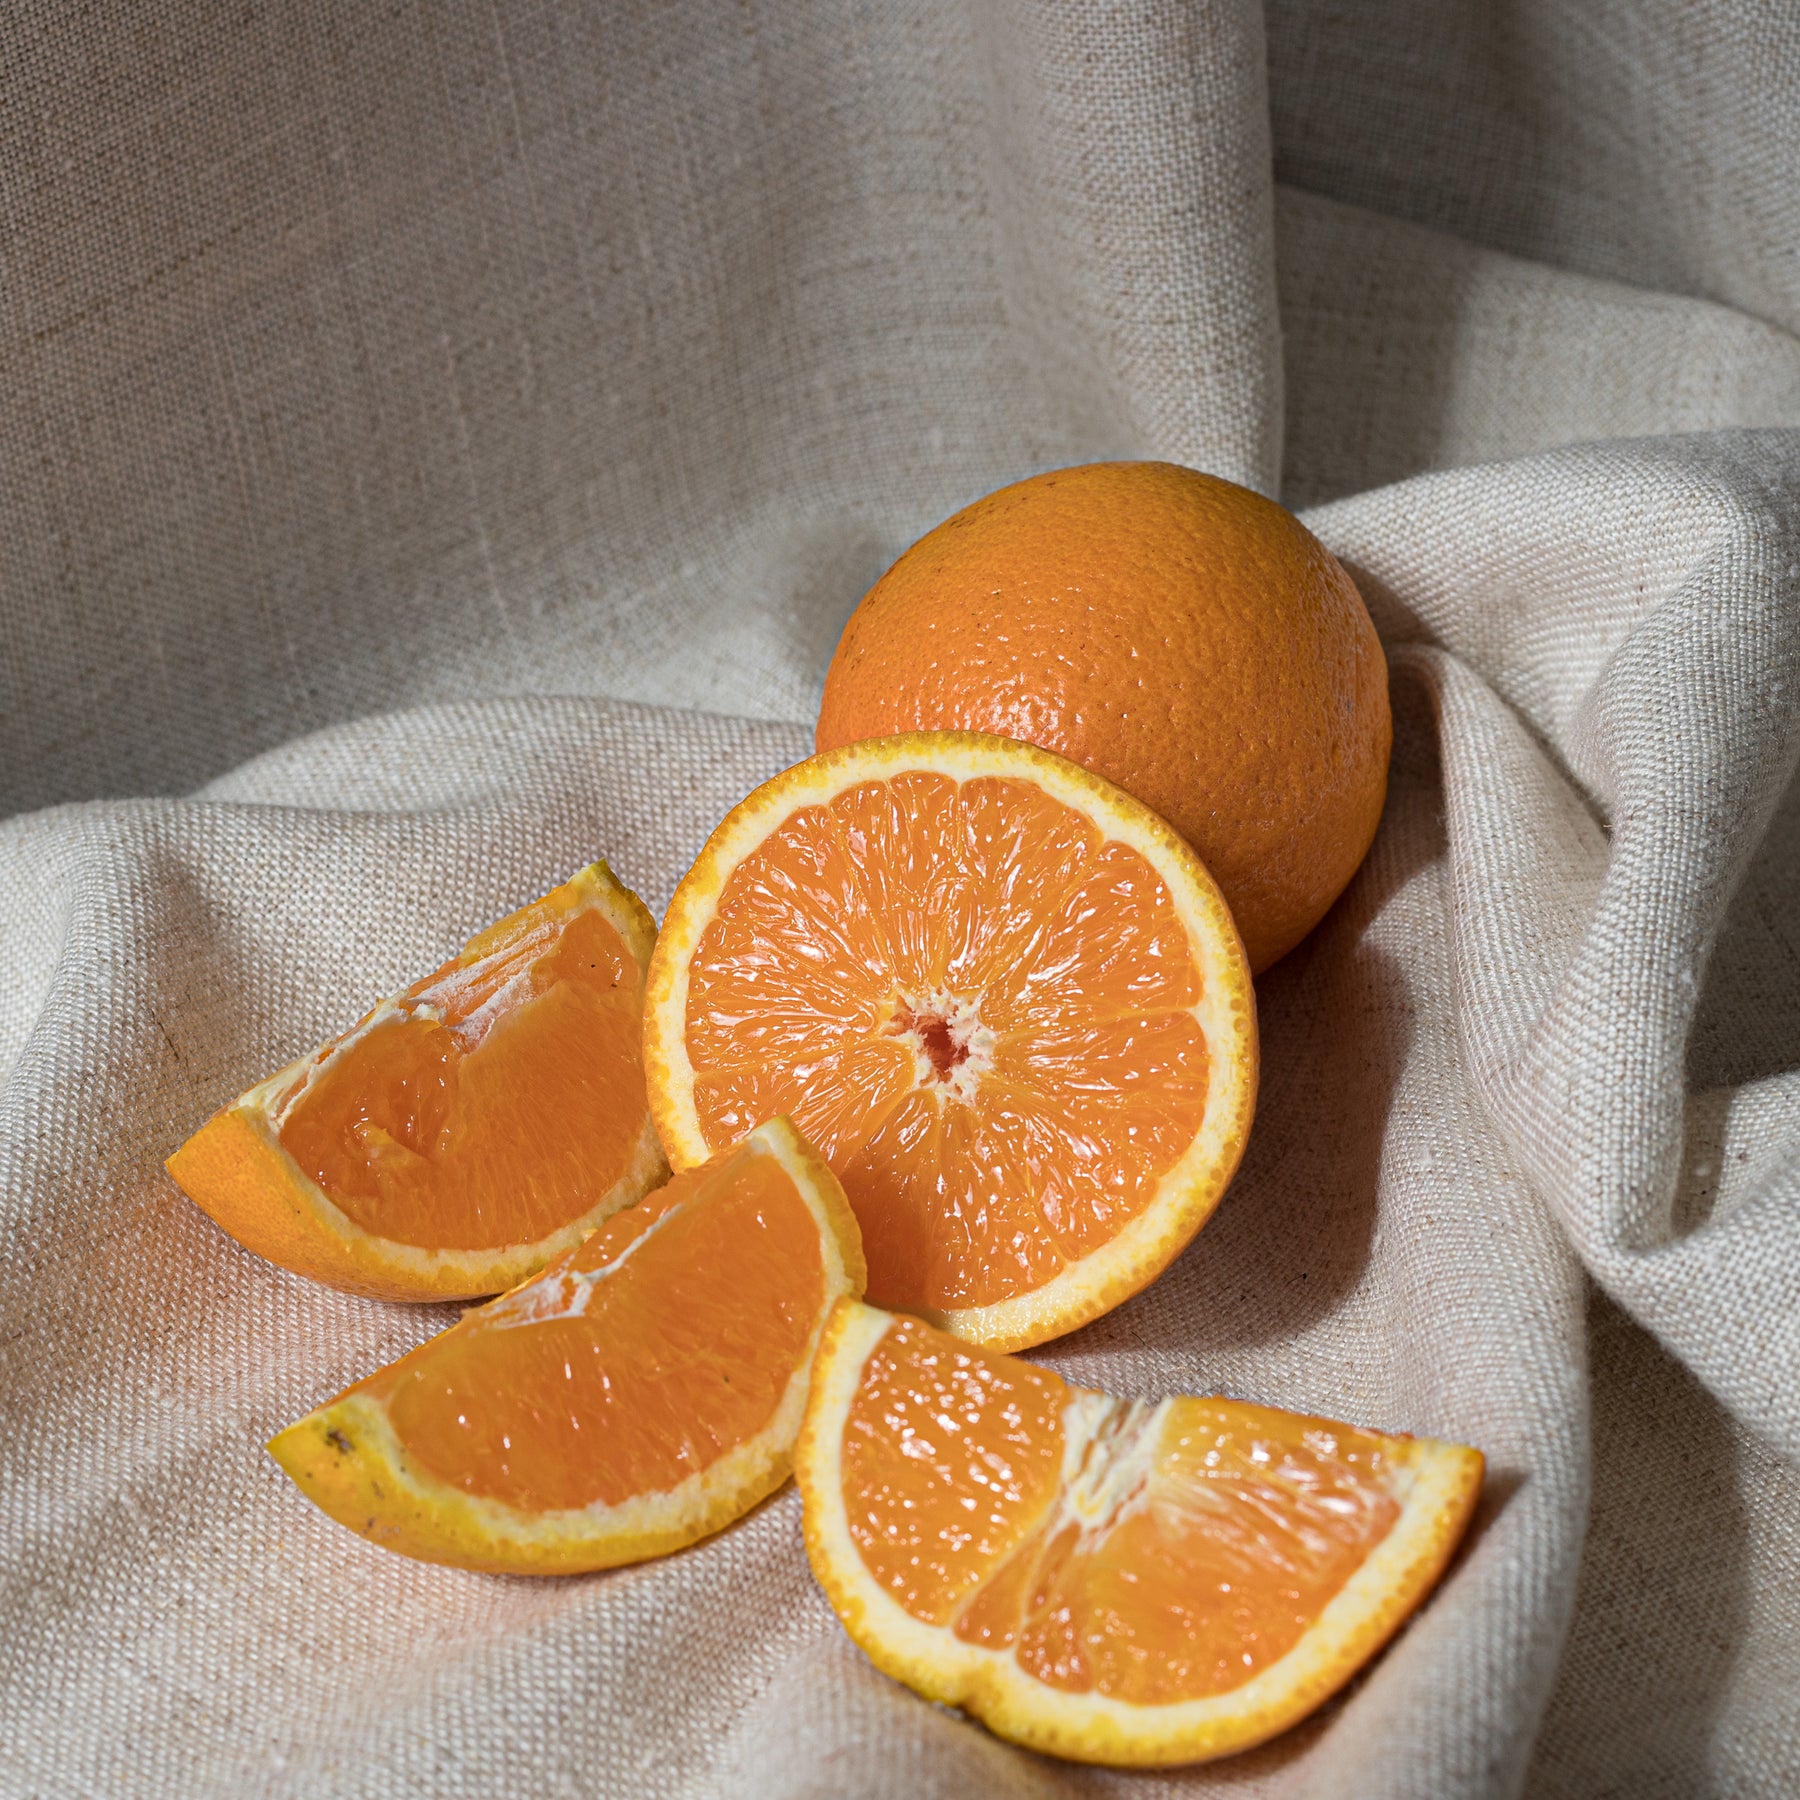 sweet orange fruit sliced